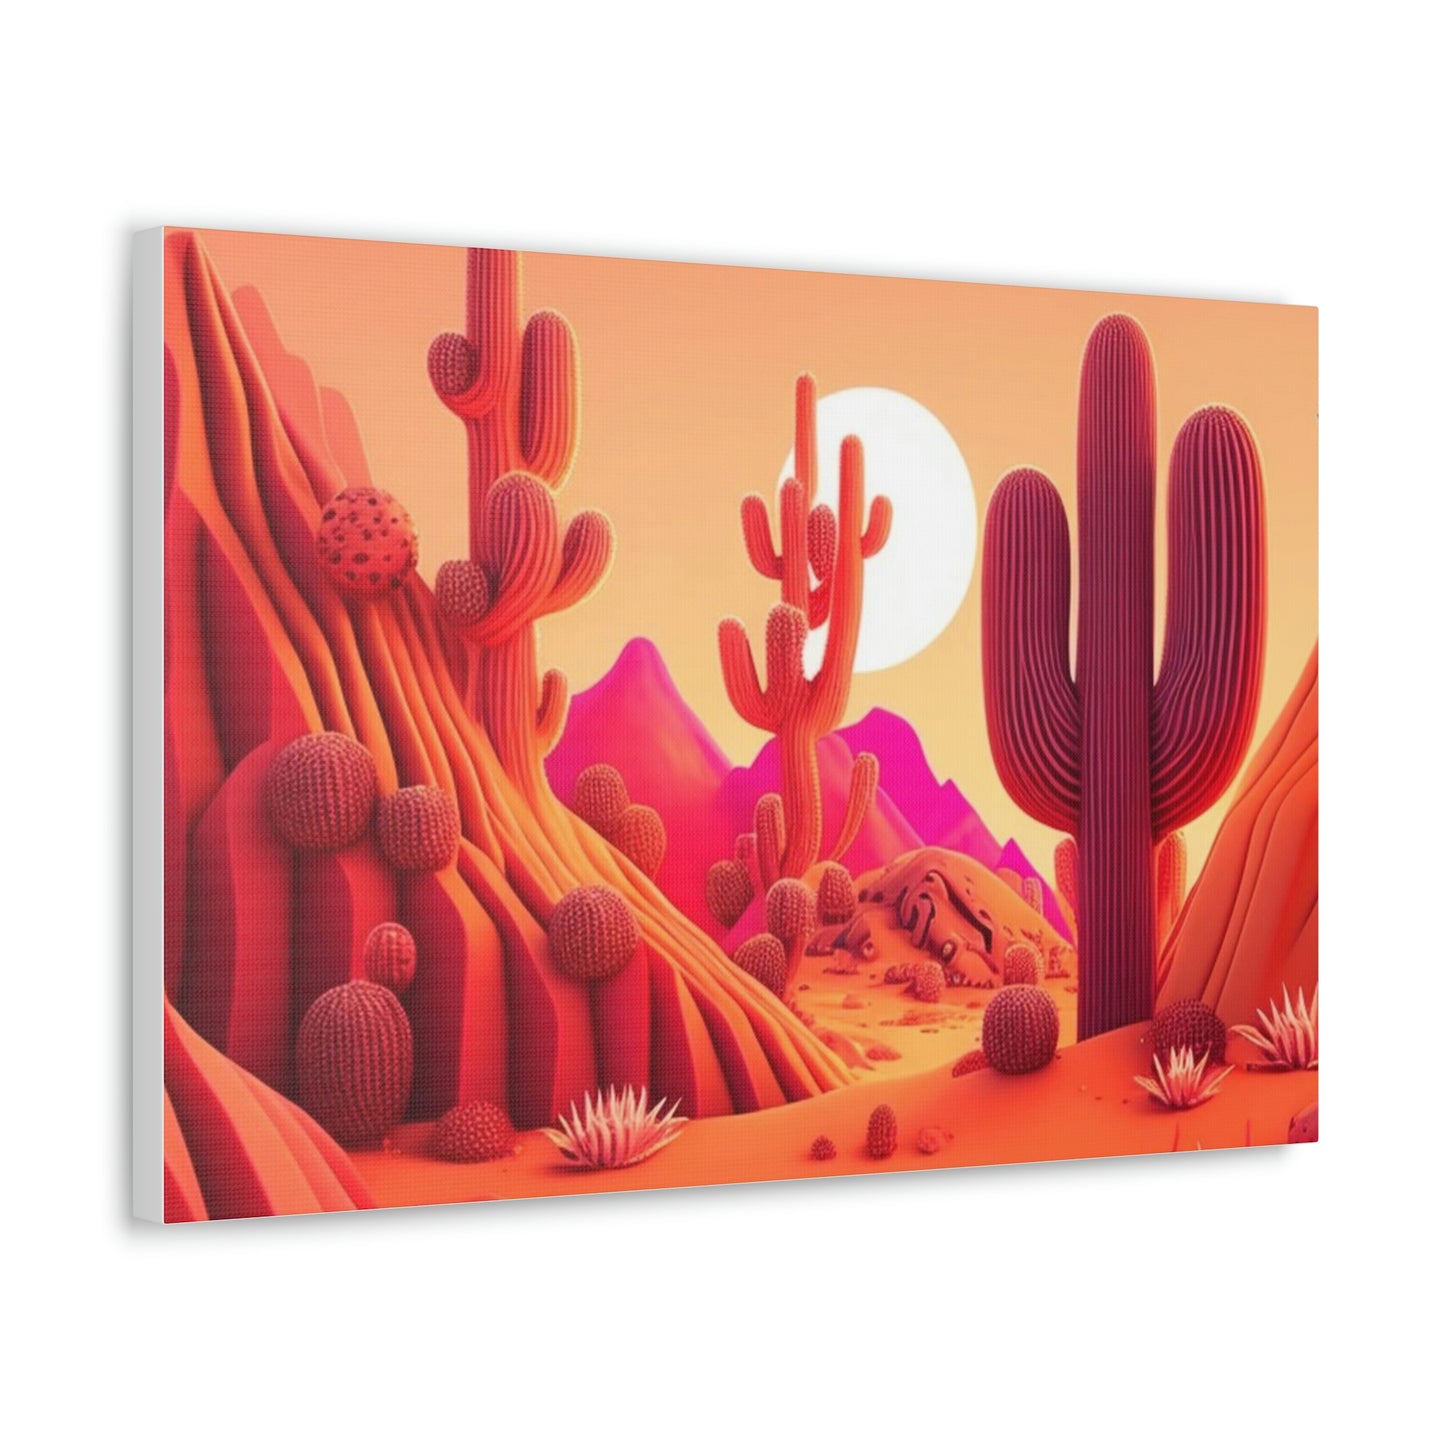 Abstract desert landscape